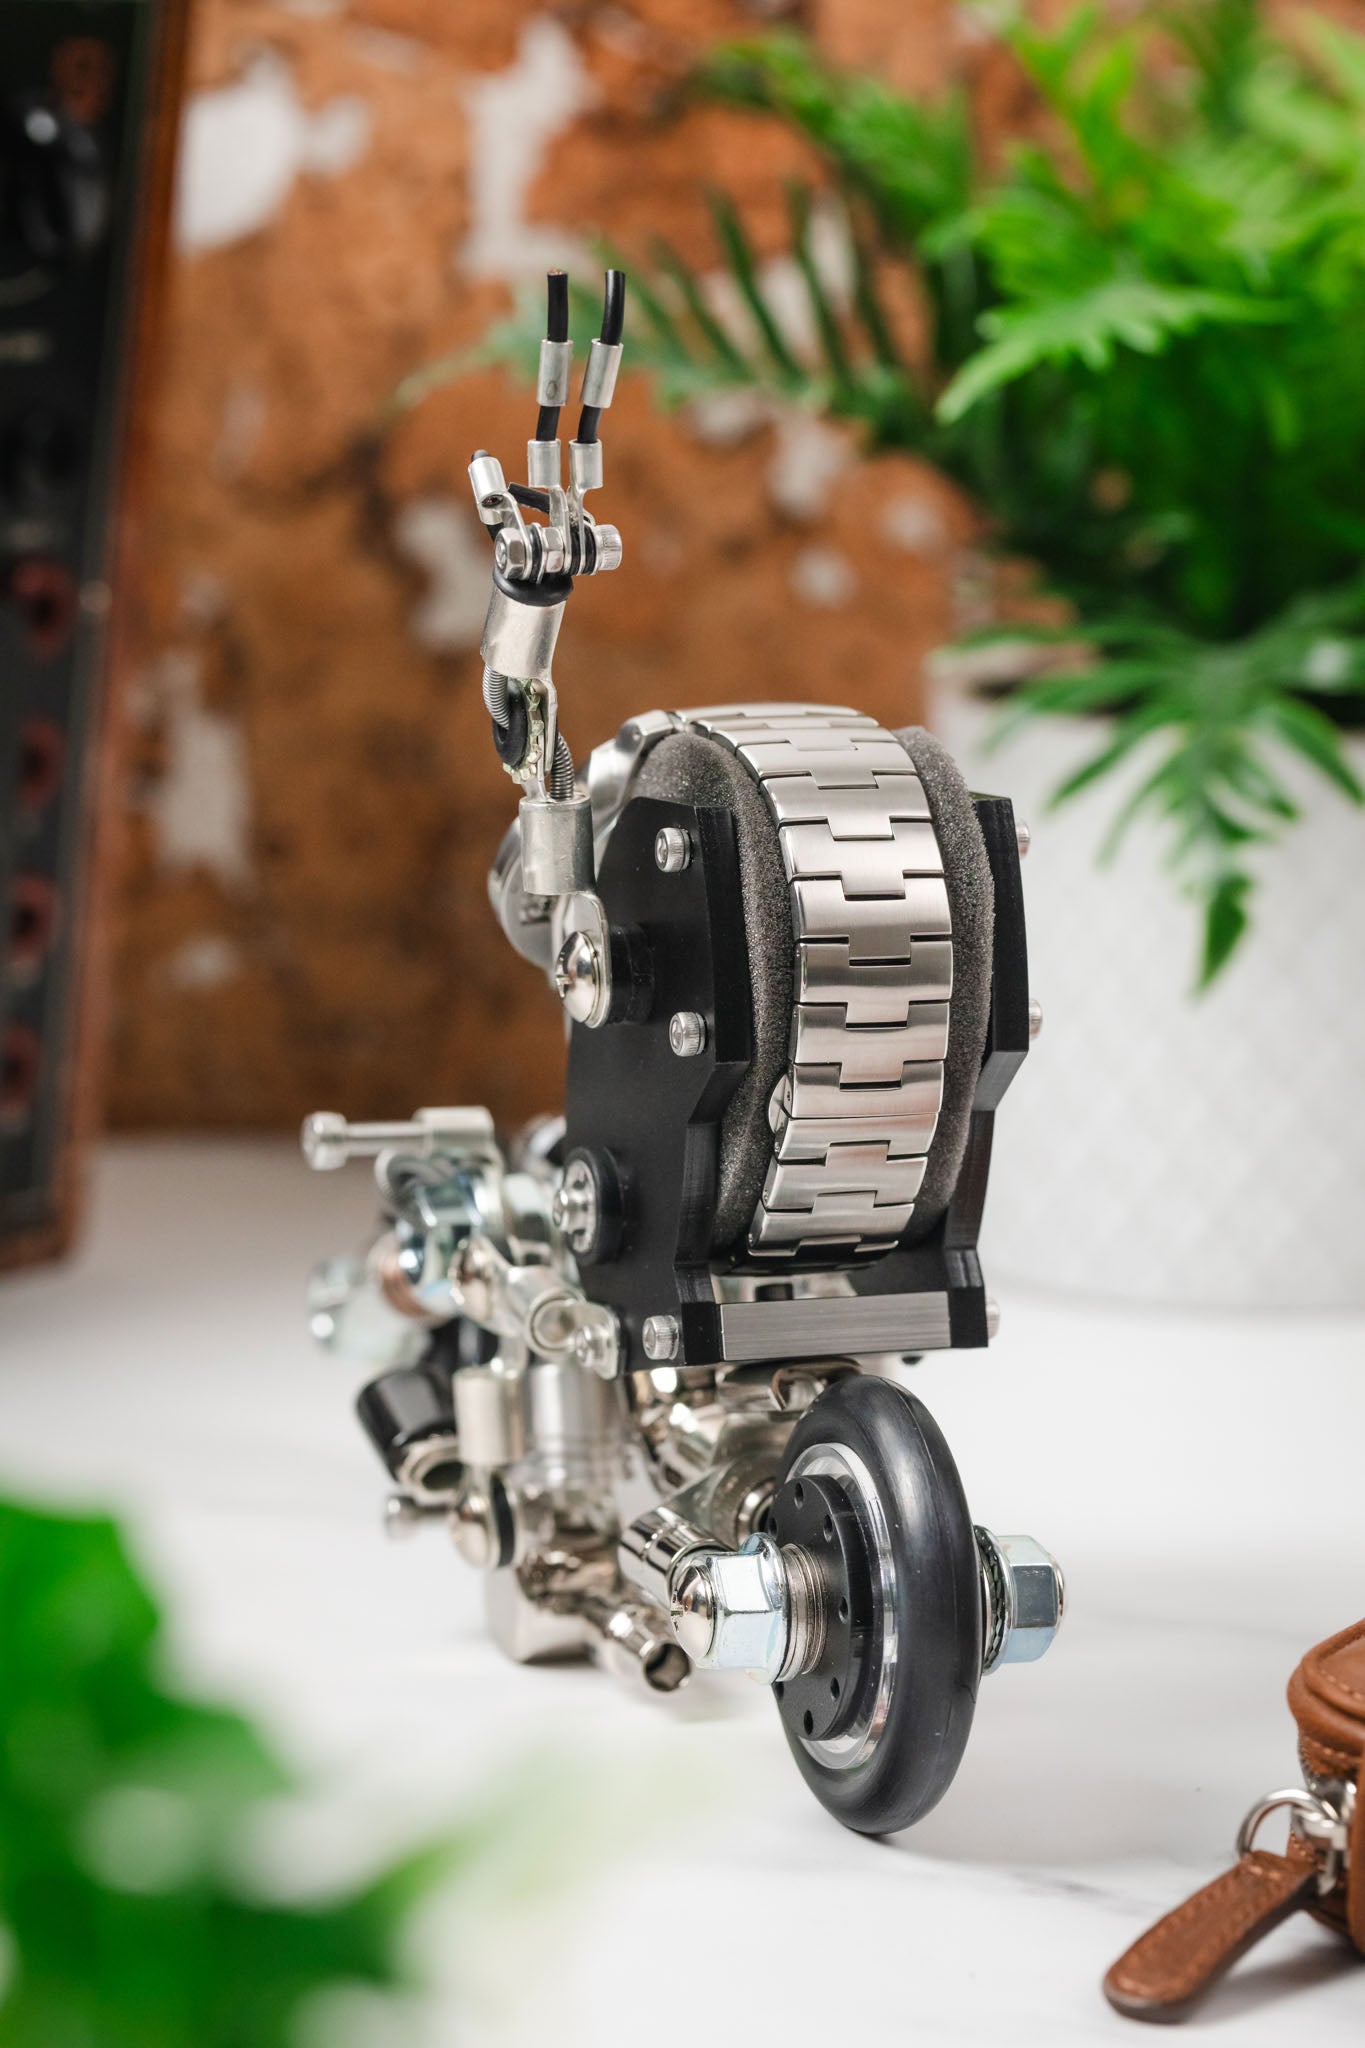 ROBOTOYS - 'HARLEY' ROBOT BIKER- Watch holder